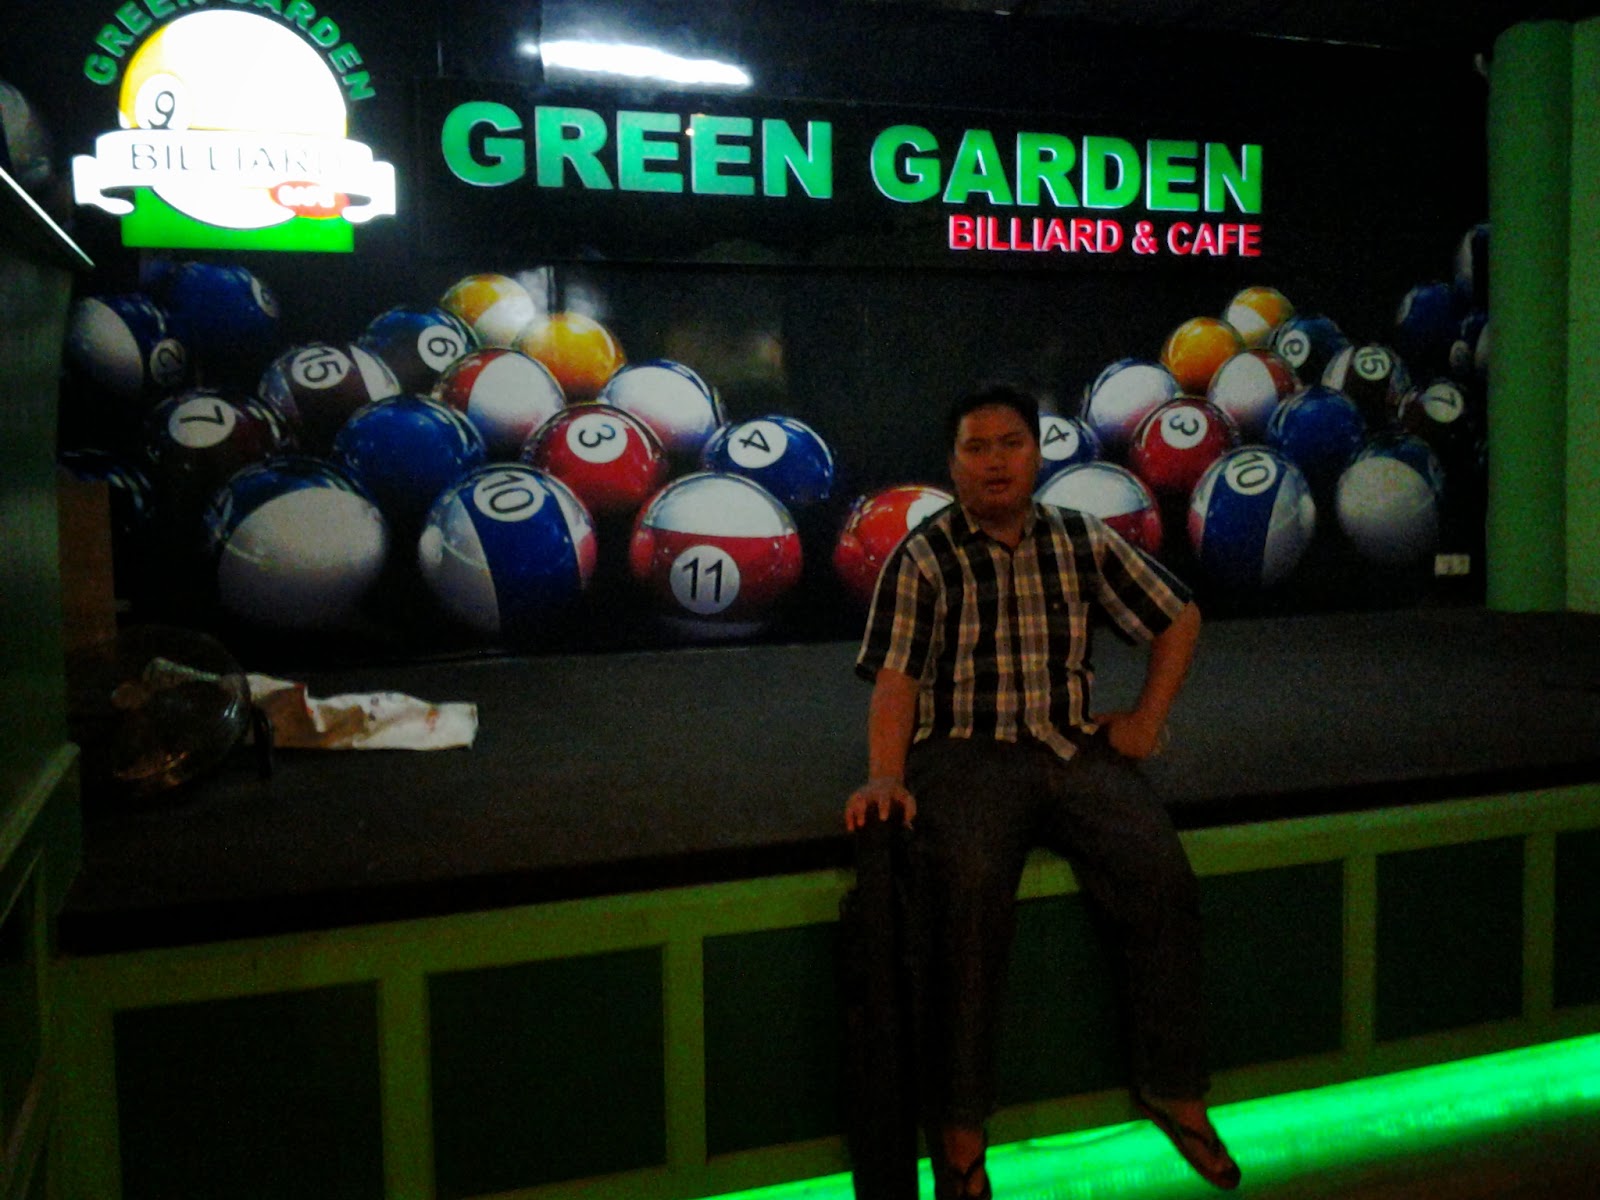 Billiardholic Informasi Tempat Billiard Bilyar Bilyard Di Jakarta Dan Sekitarnya New Green Garden Ngg Billiard Green Garden Jl Panjang Arteri Kedoya Kebon Jeruk Jakarta Barat